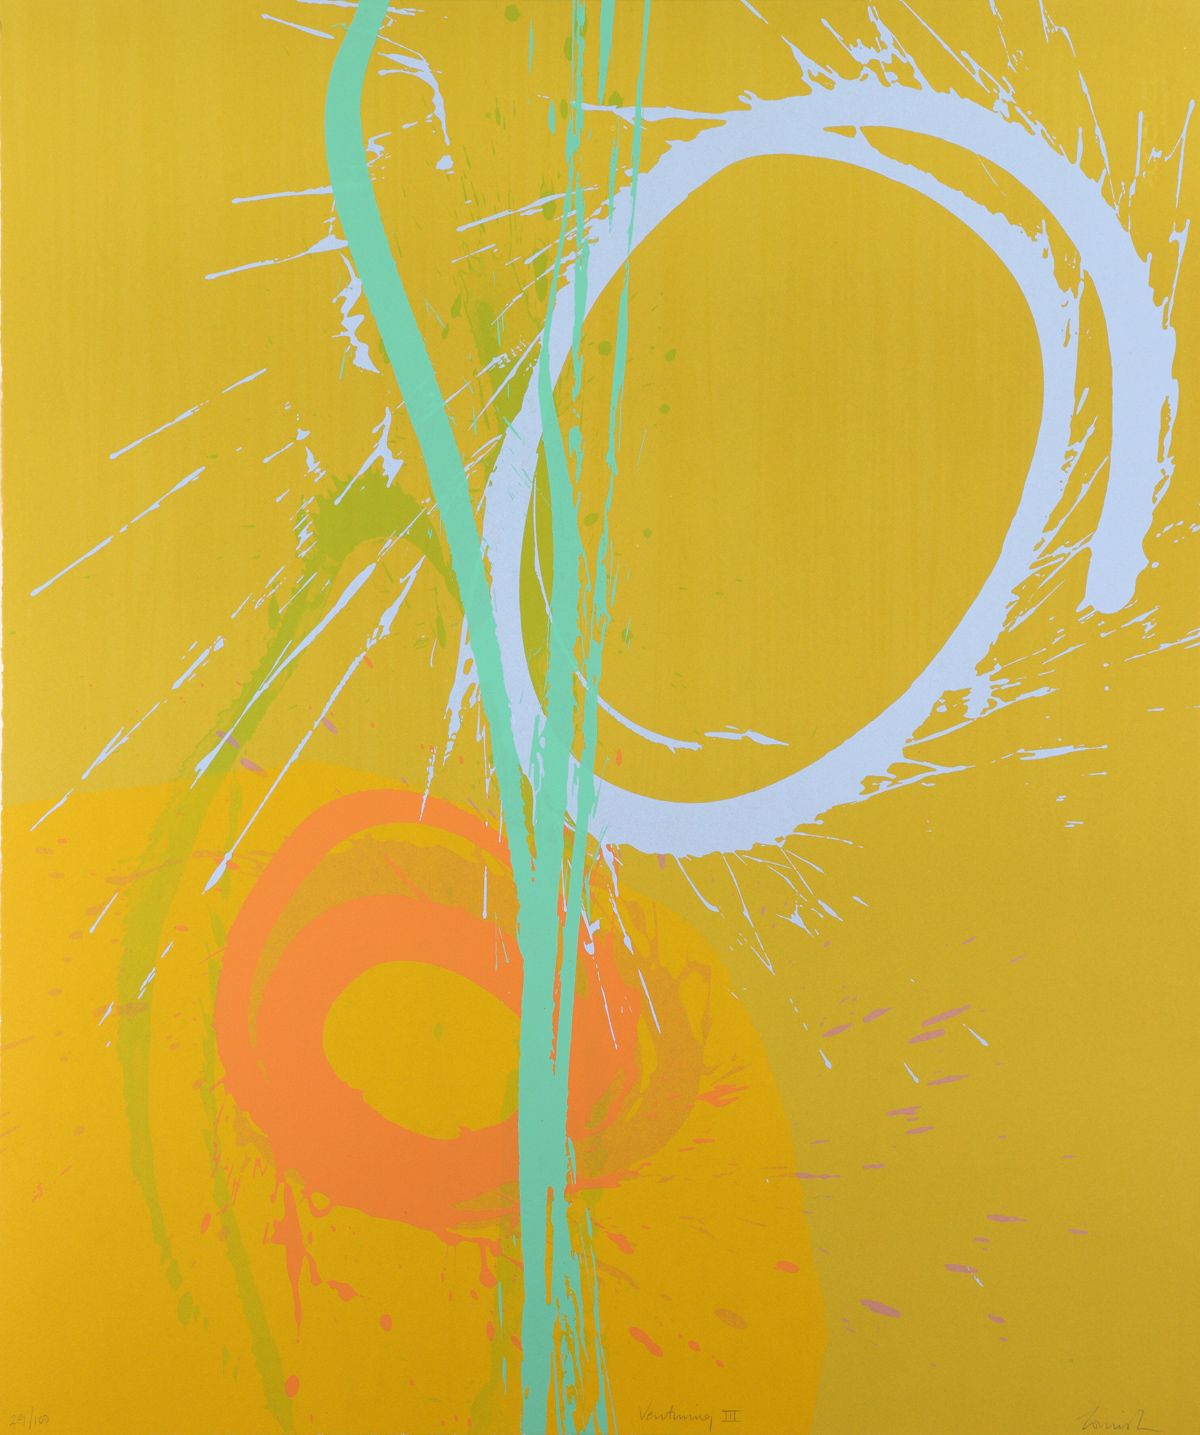 Charlotte-Cornish-VenturingIII-Limited-Edition-Silkscreen-Print-Abstract-Yellow-Orange-White-TAP-Galleries